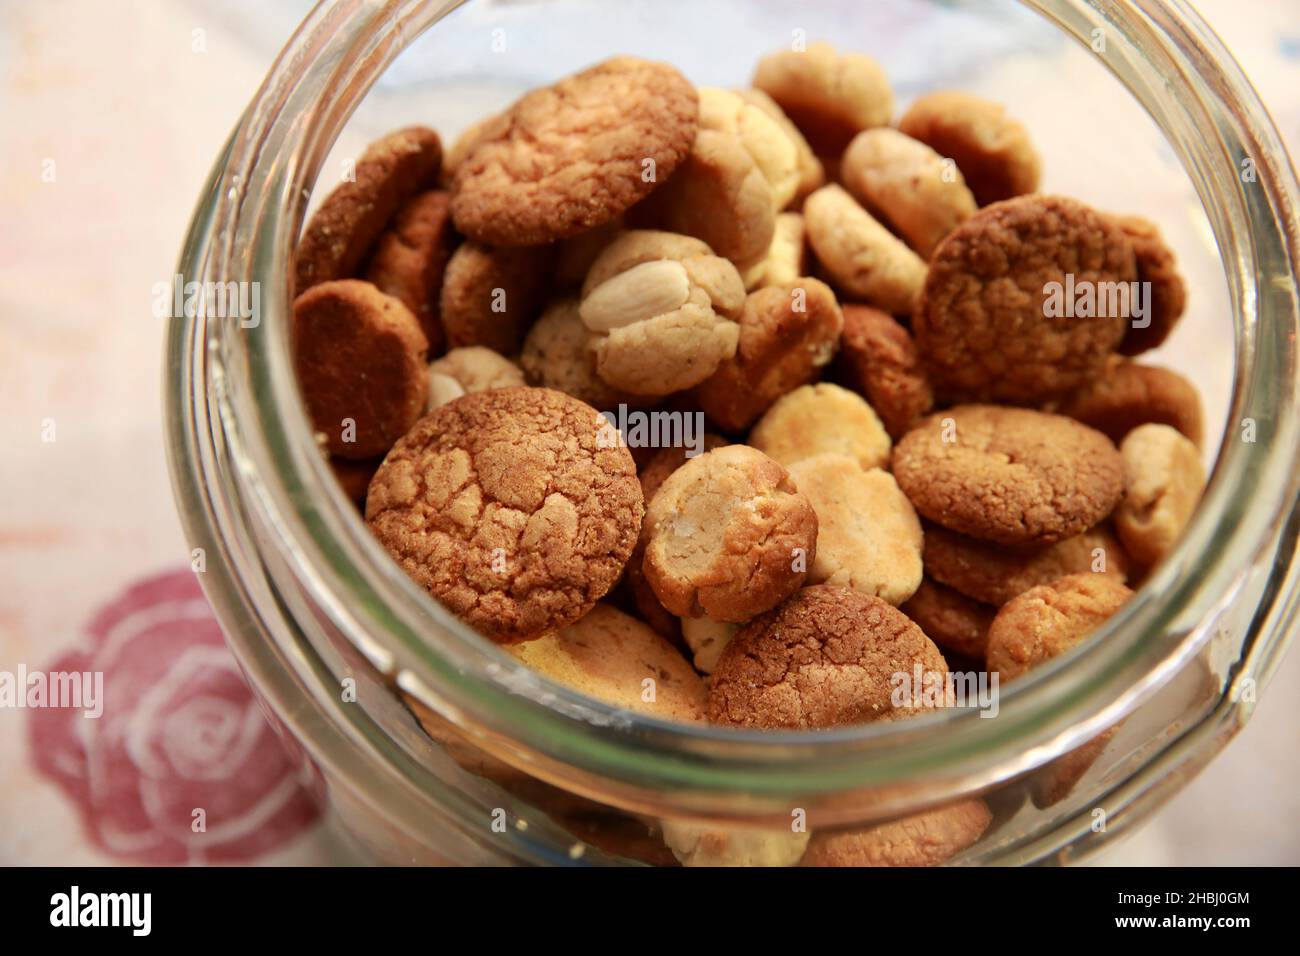 Cookie Jar full of home baked cookies Stock Photo